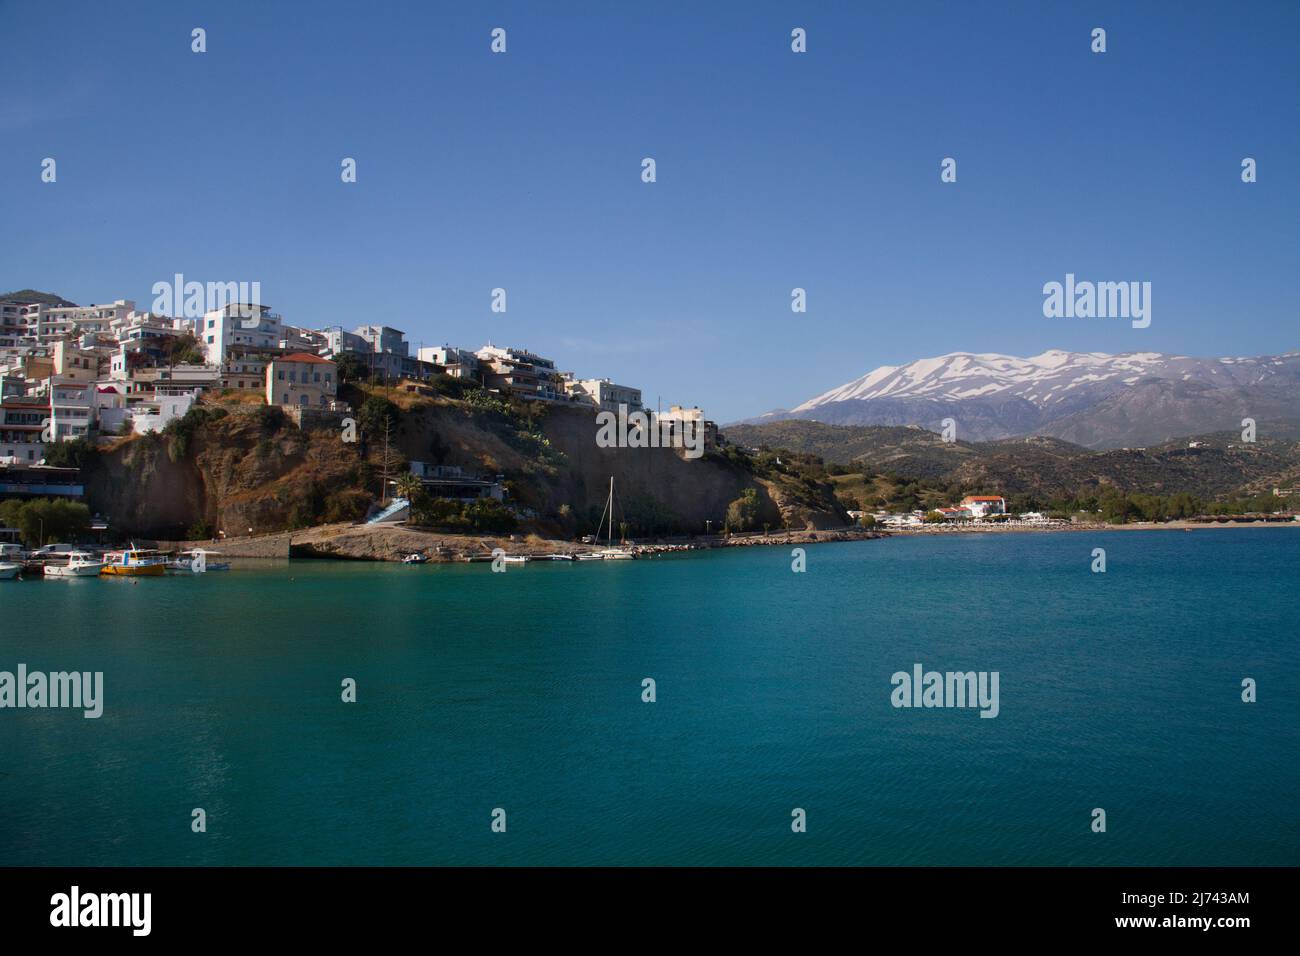 Agia Galini, picturesque mediterranean village, in the background the show covered mountain, Ida Psiloritis Stock Photo